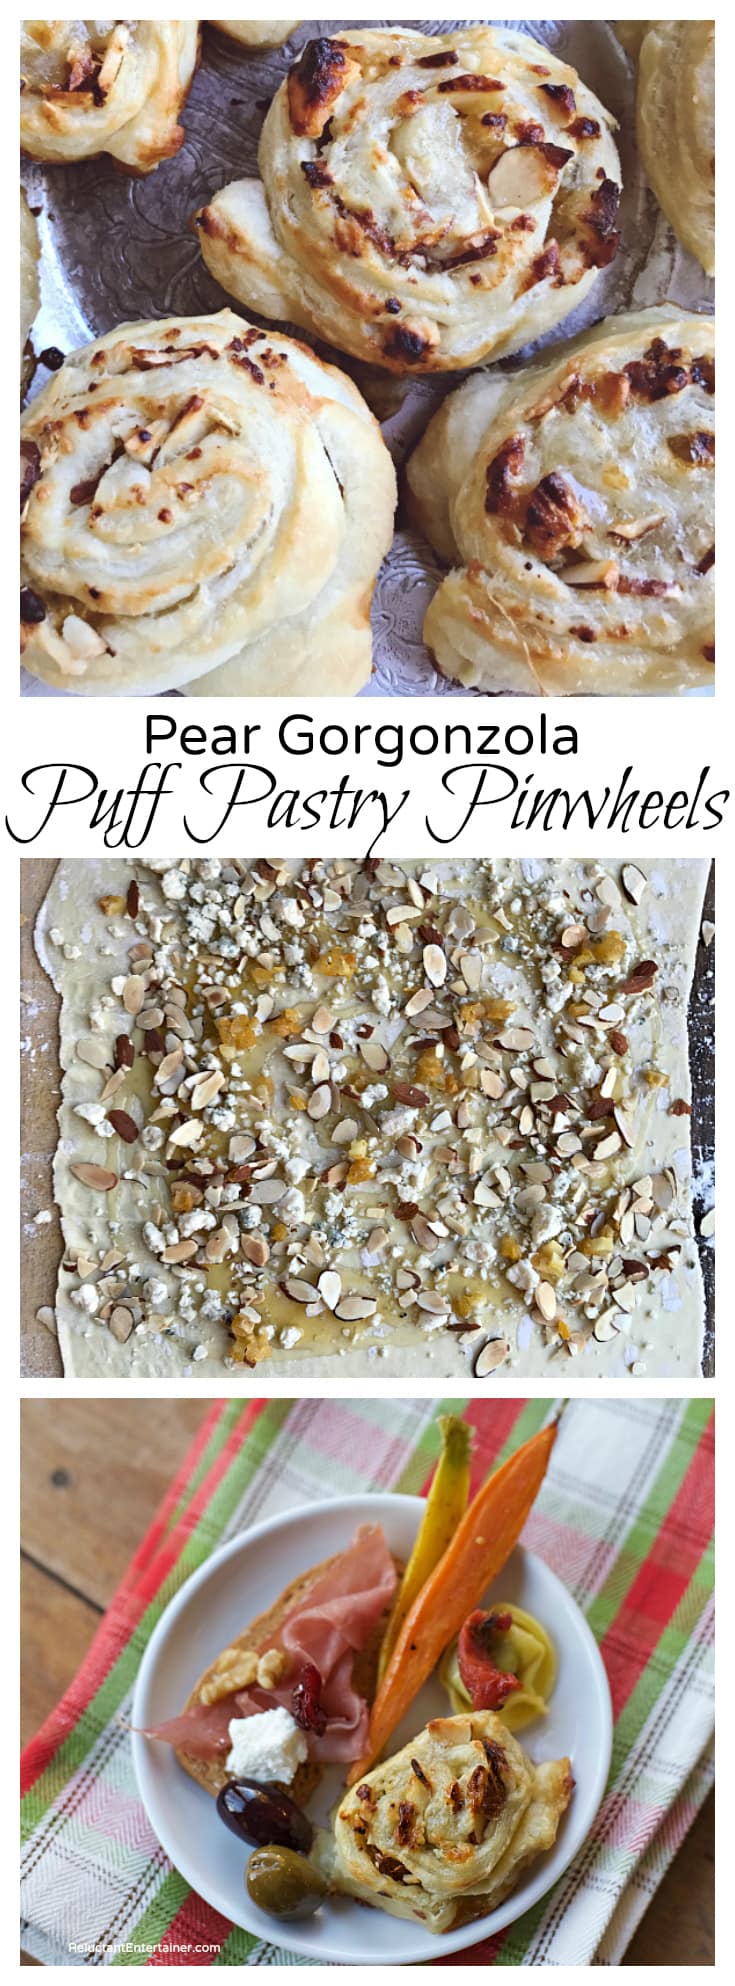 Pear Gorgonzola Puff Pastry Pinwheels